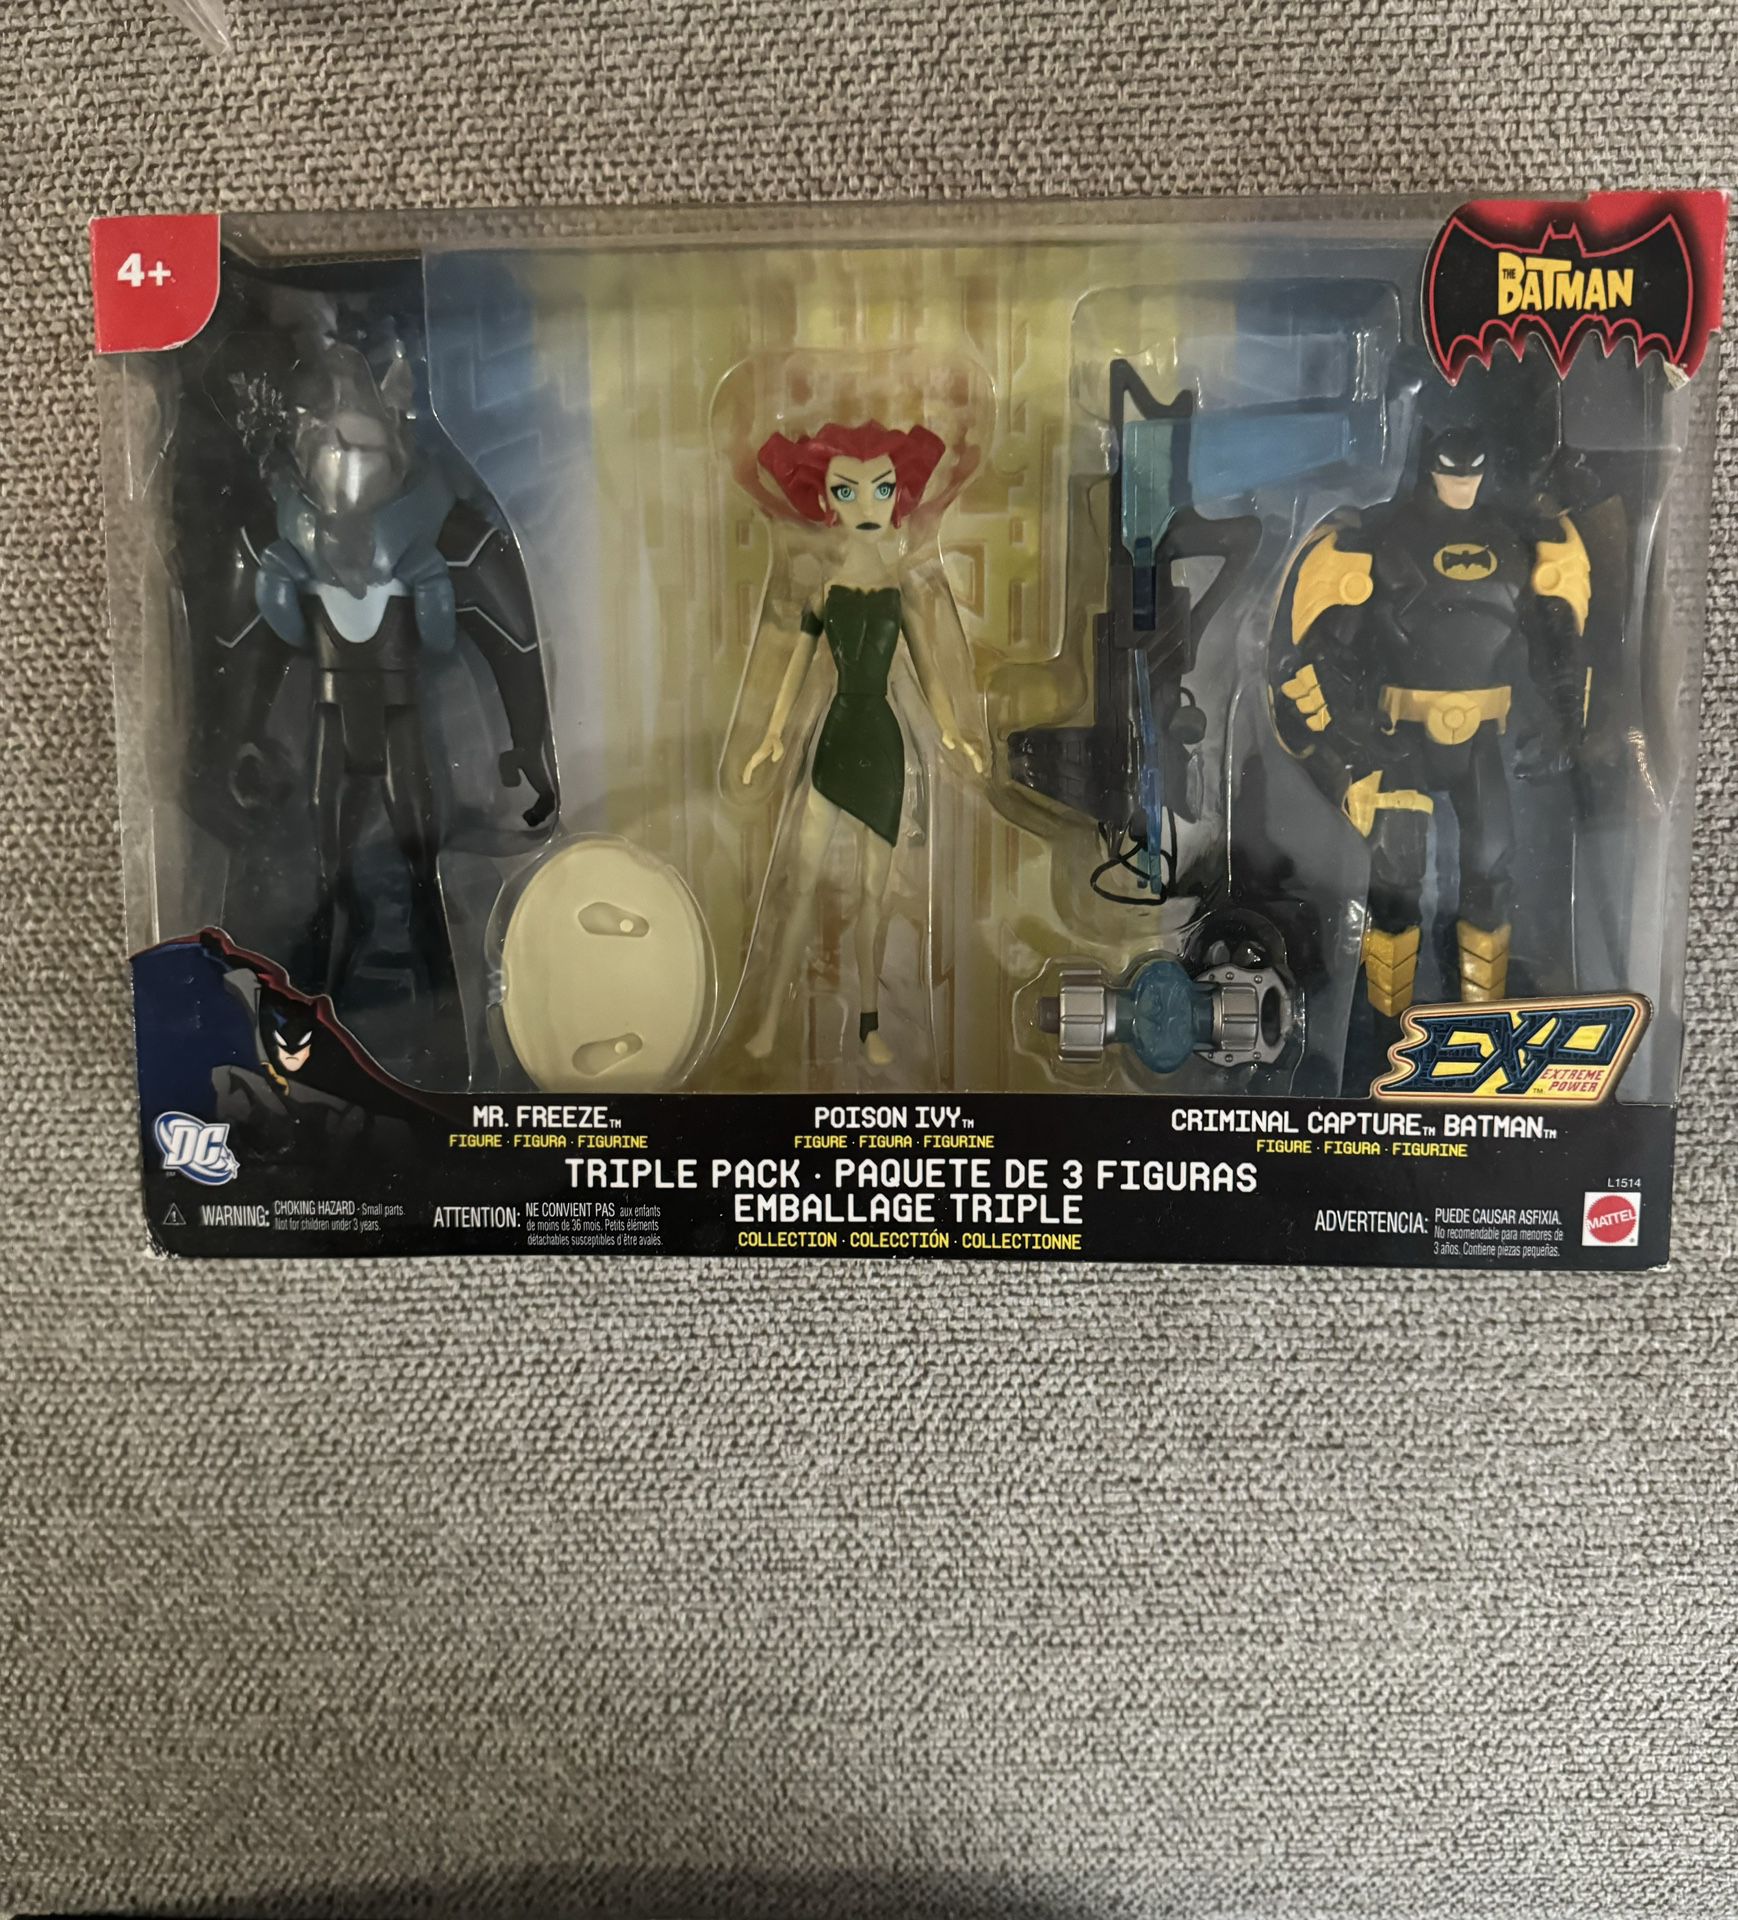 The Batman Figures